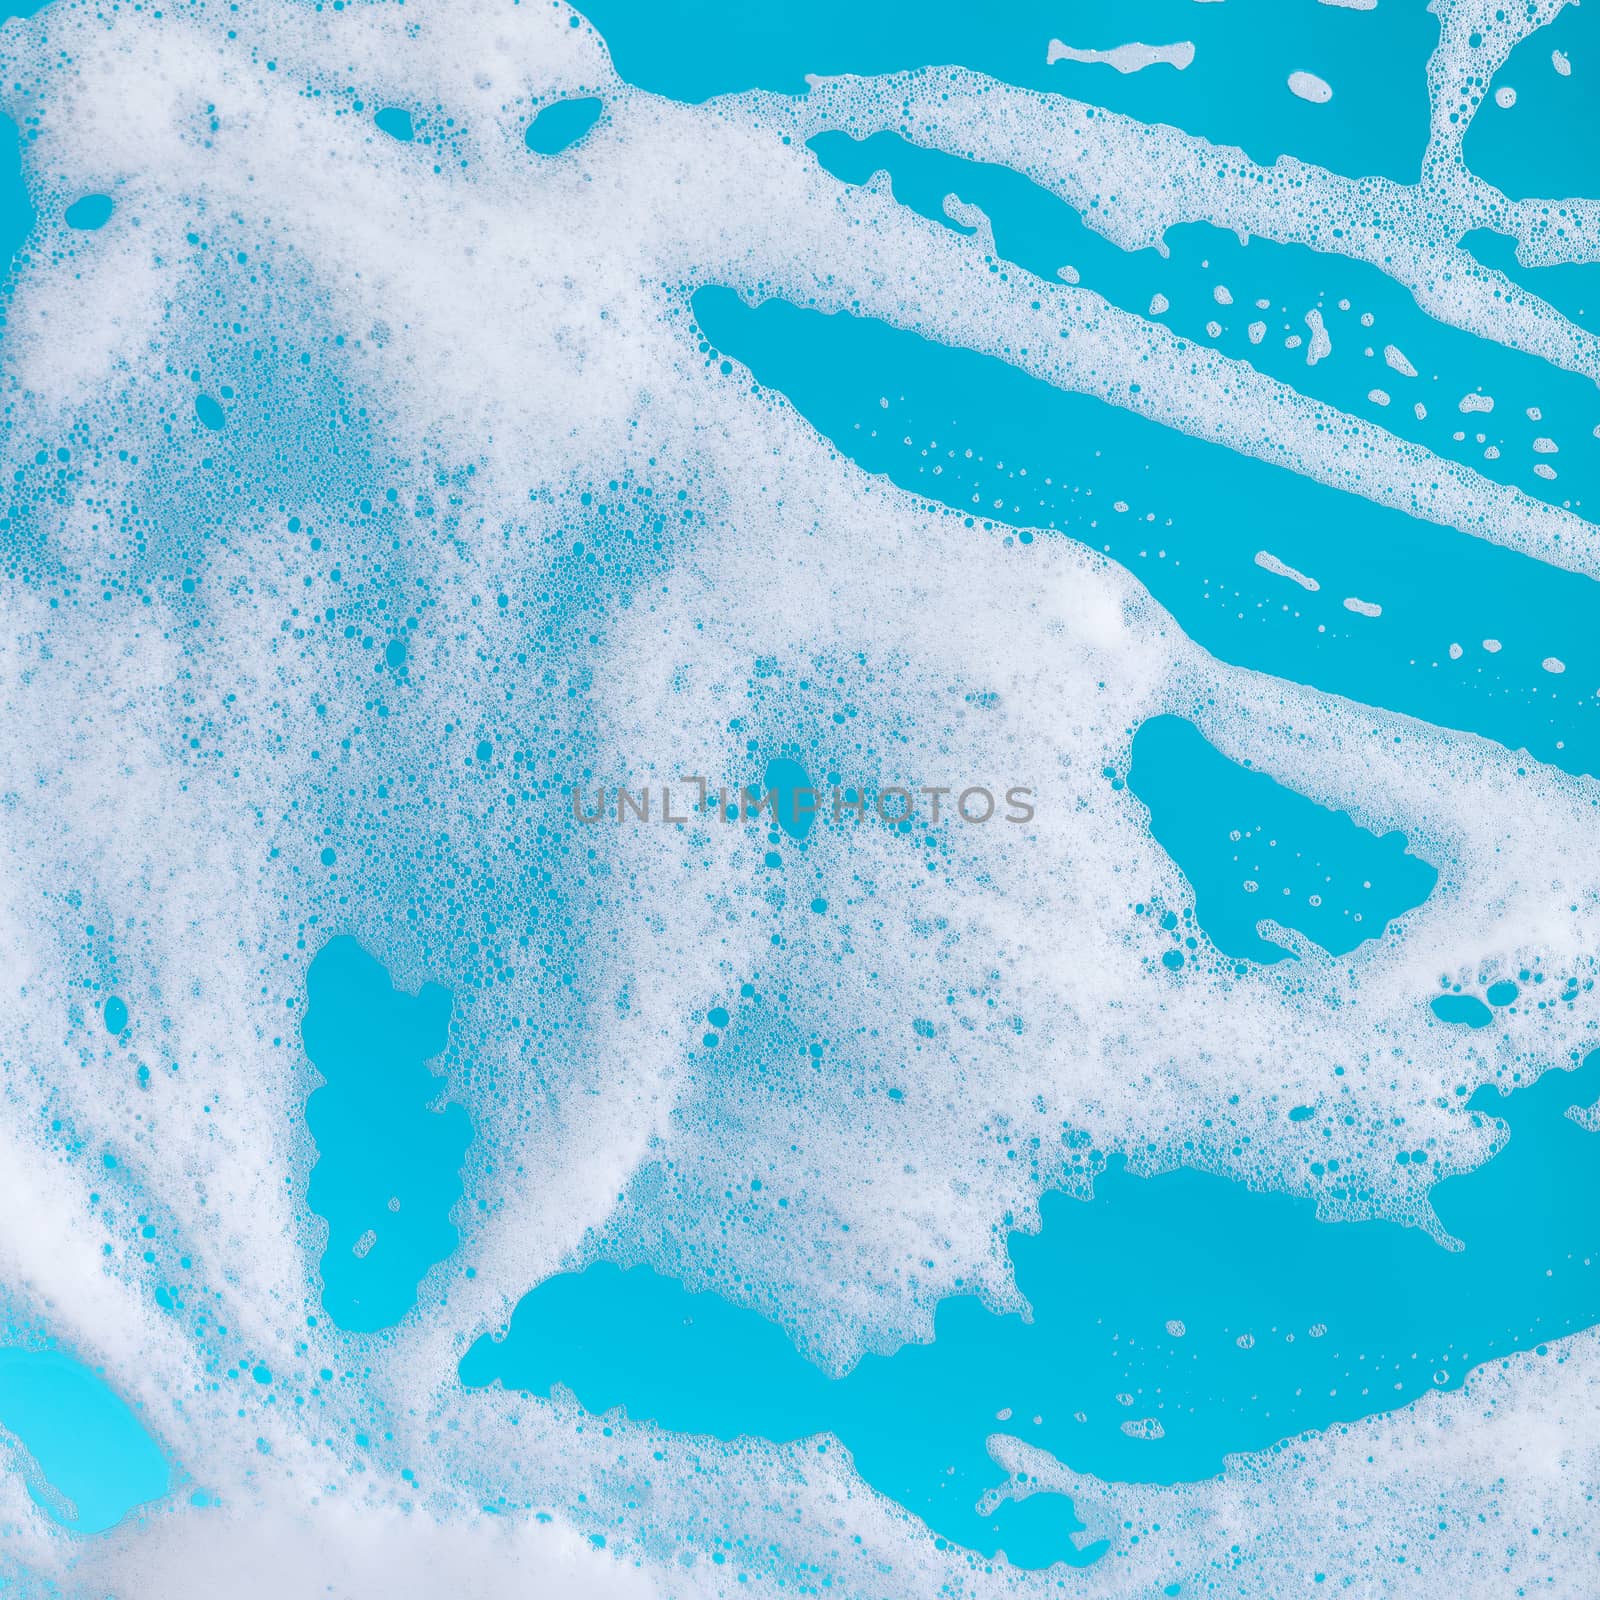 soap foam on a blue background by MegaArt